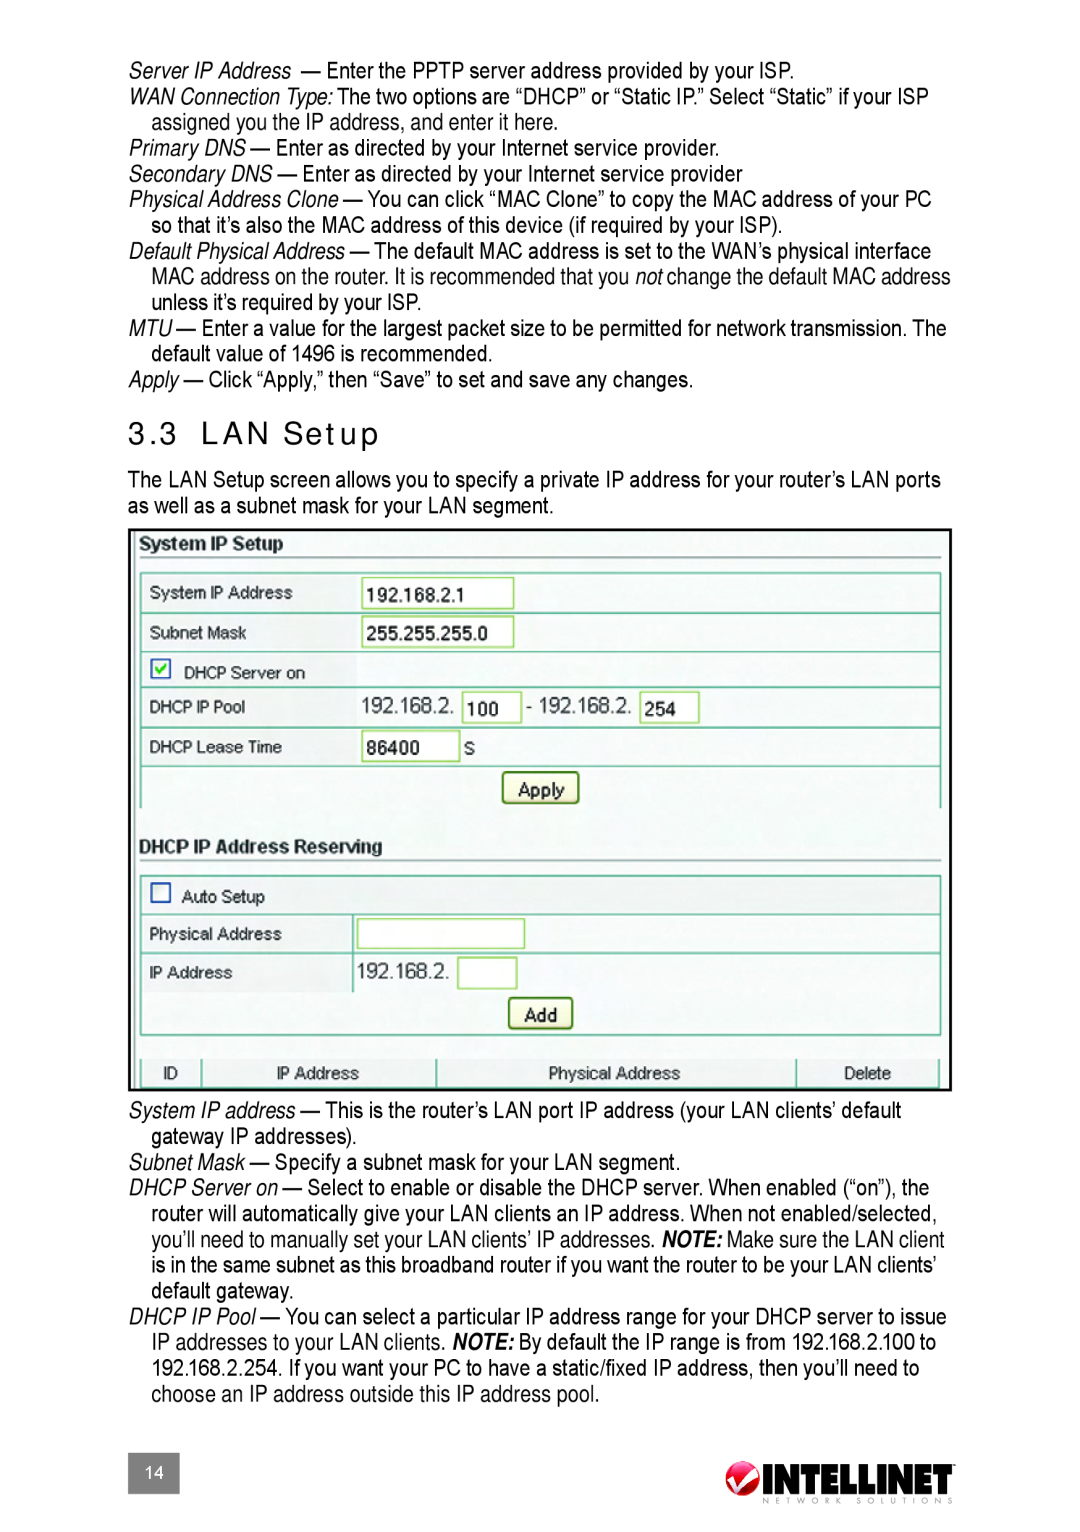 Intellinet Network Solutions 524537 user manual LAN Setup 